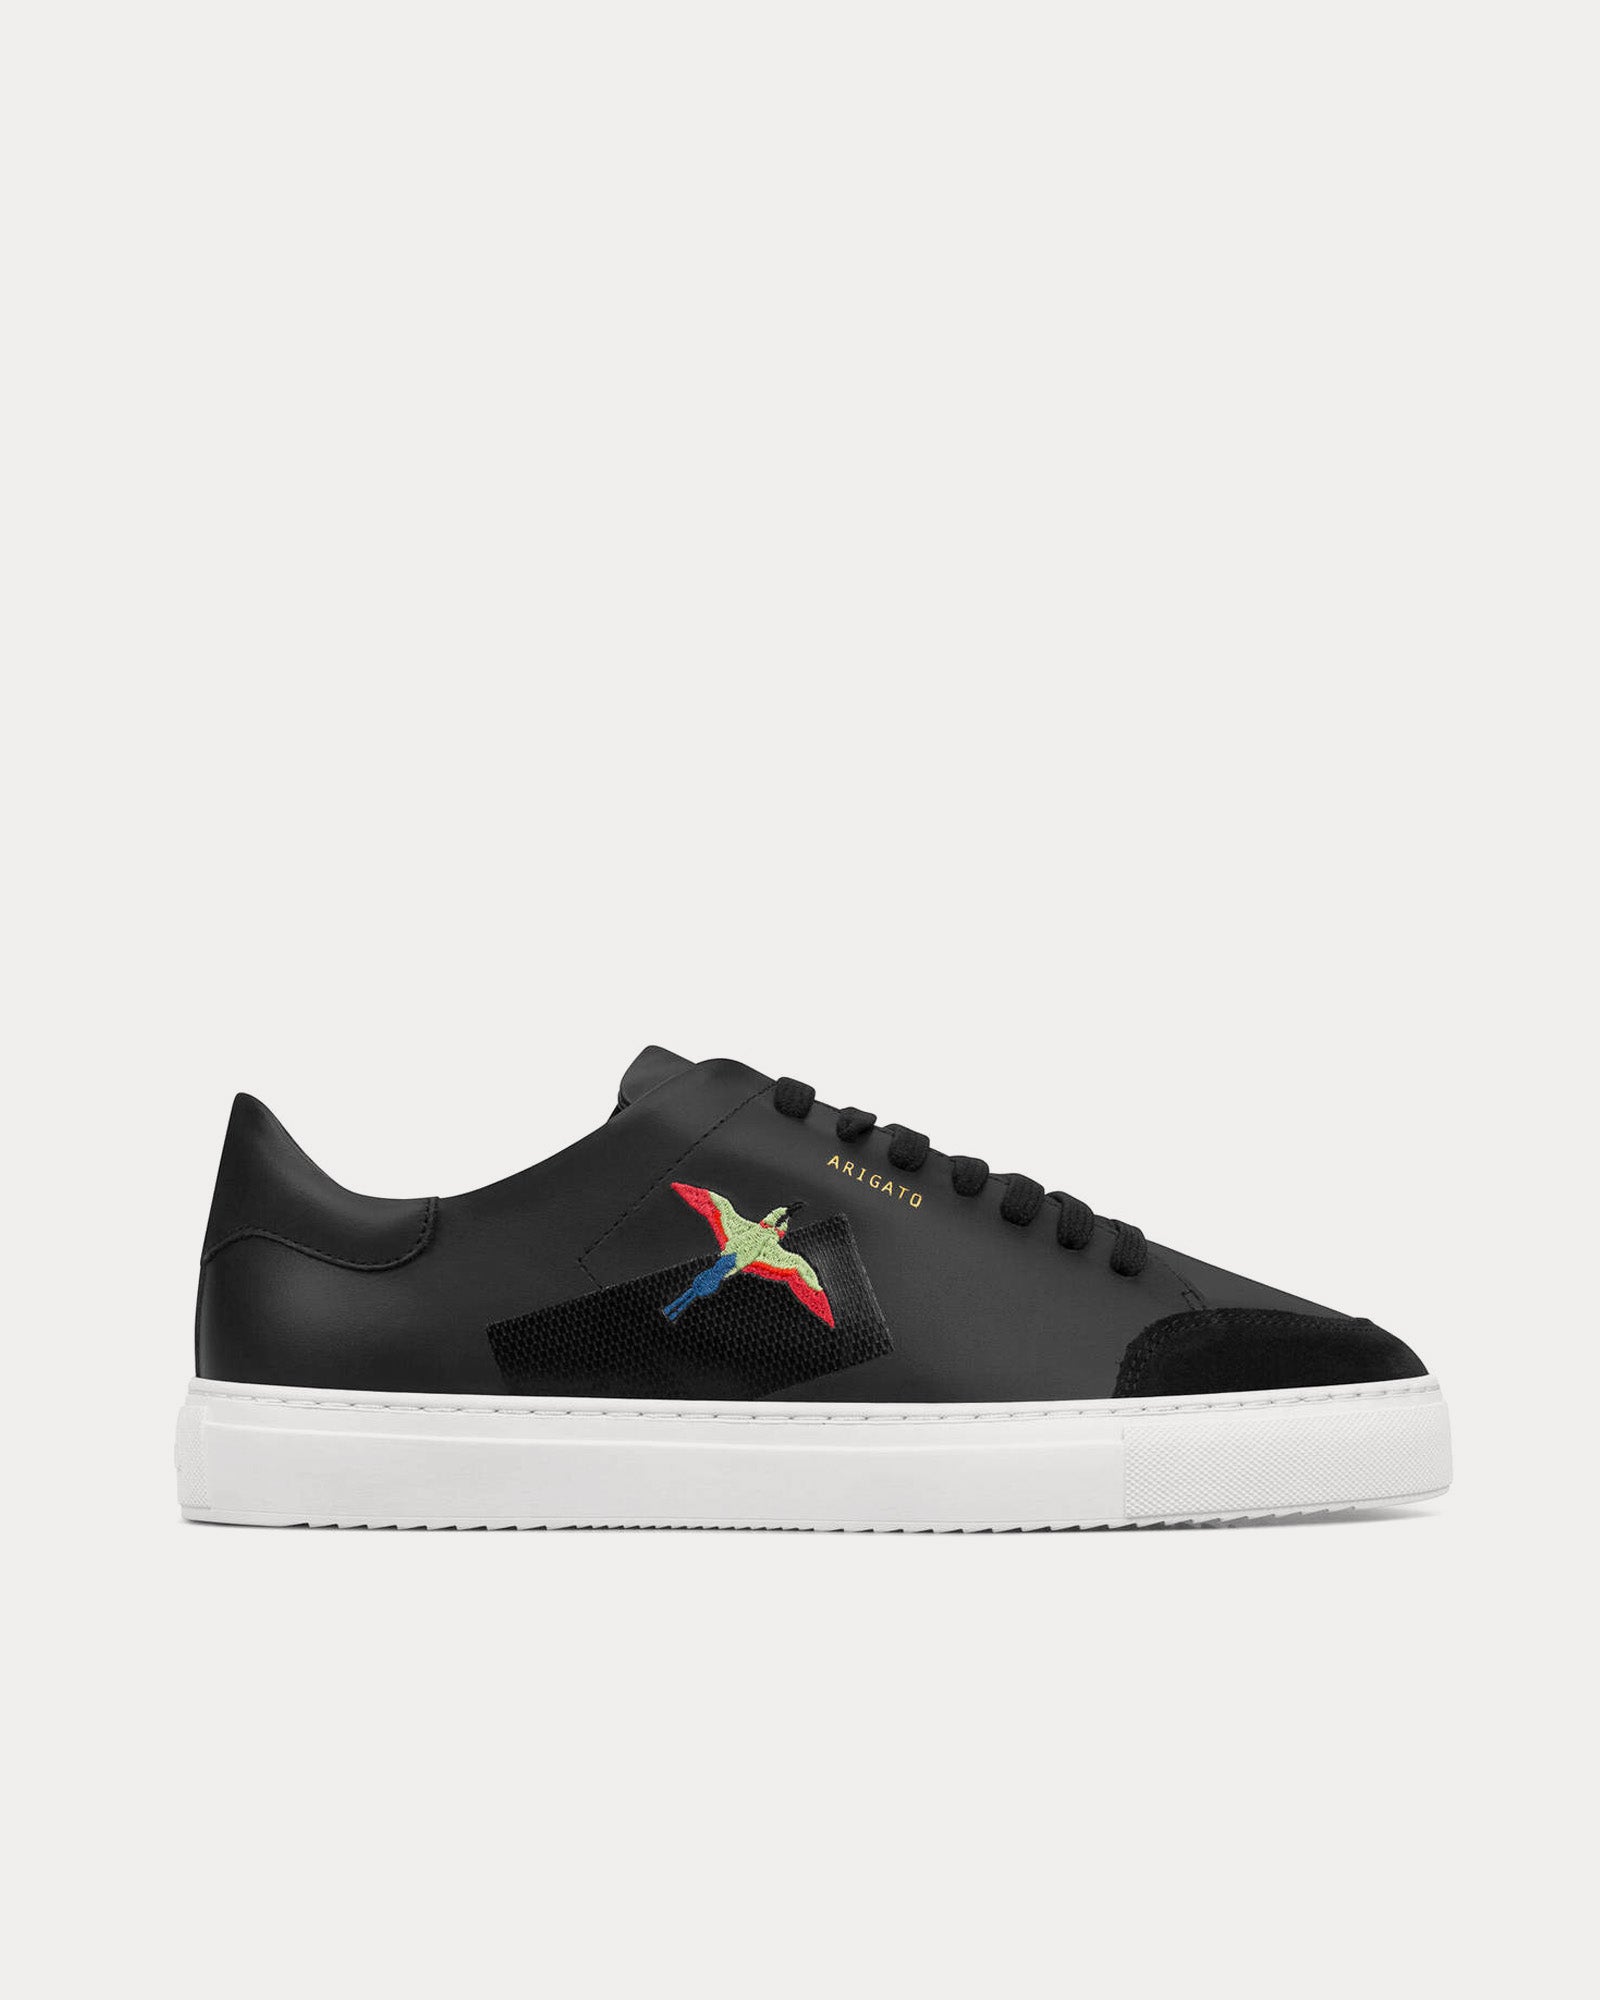 Axel Arigato - Clean 90 Bird Black / White Low Top Sneakers